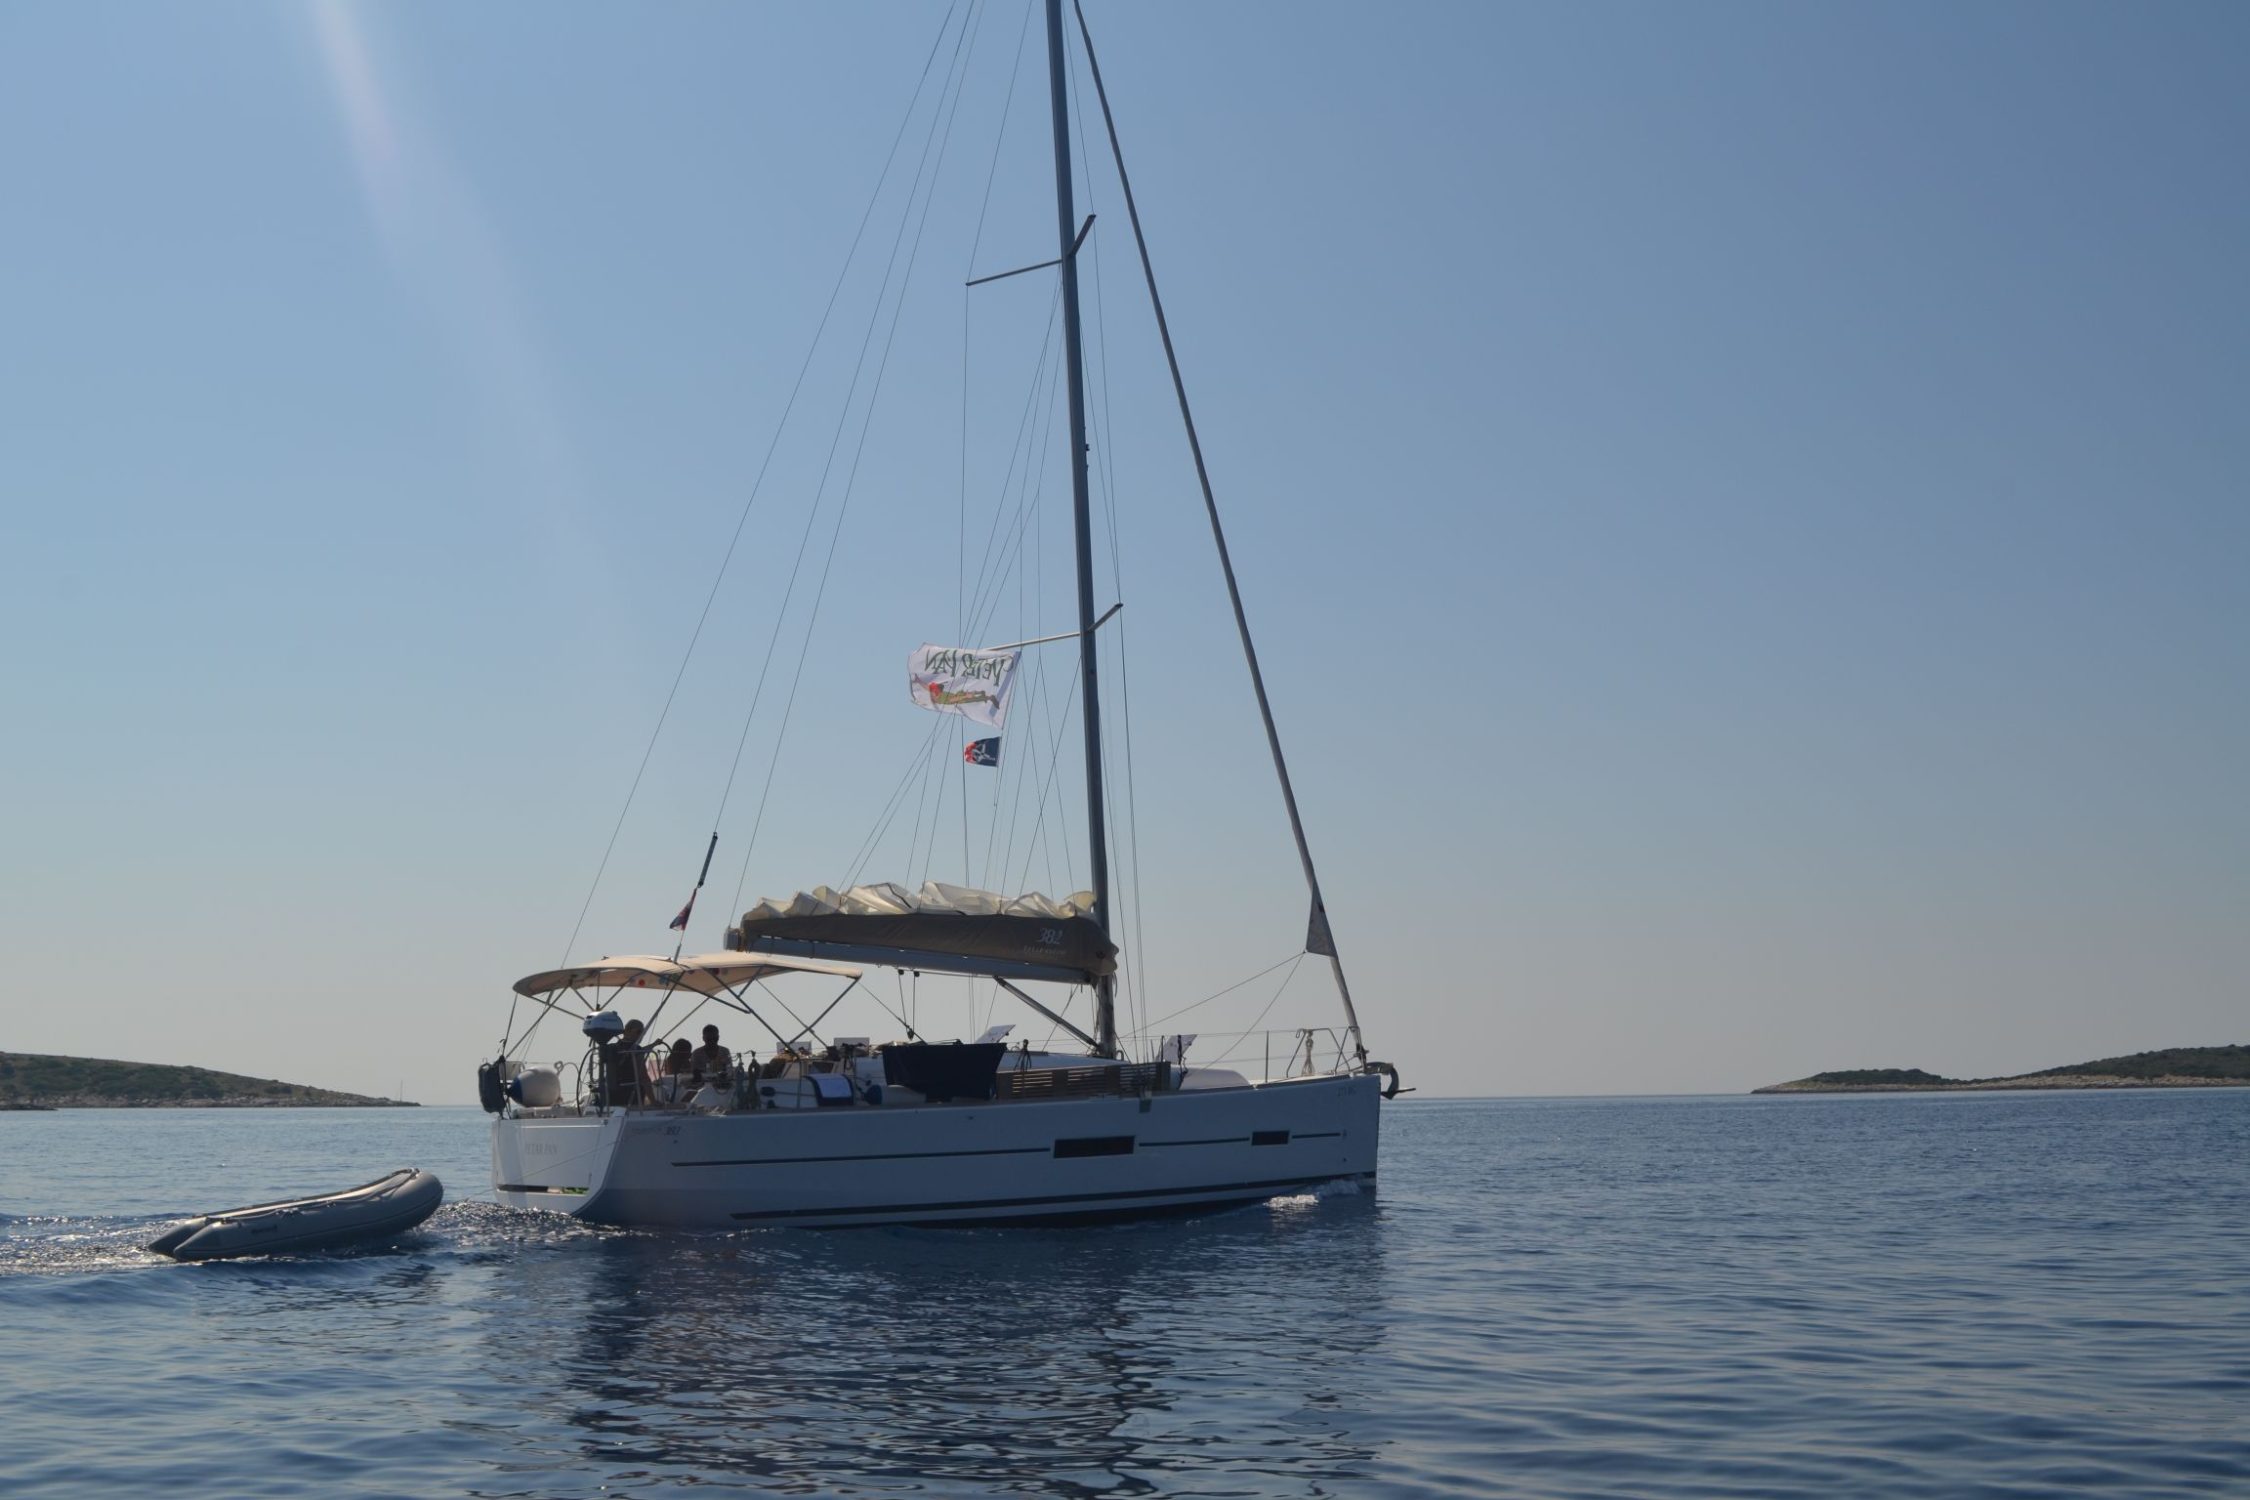 Yacht at Adriatic sea near near Croatian coast